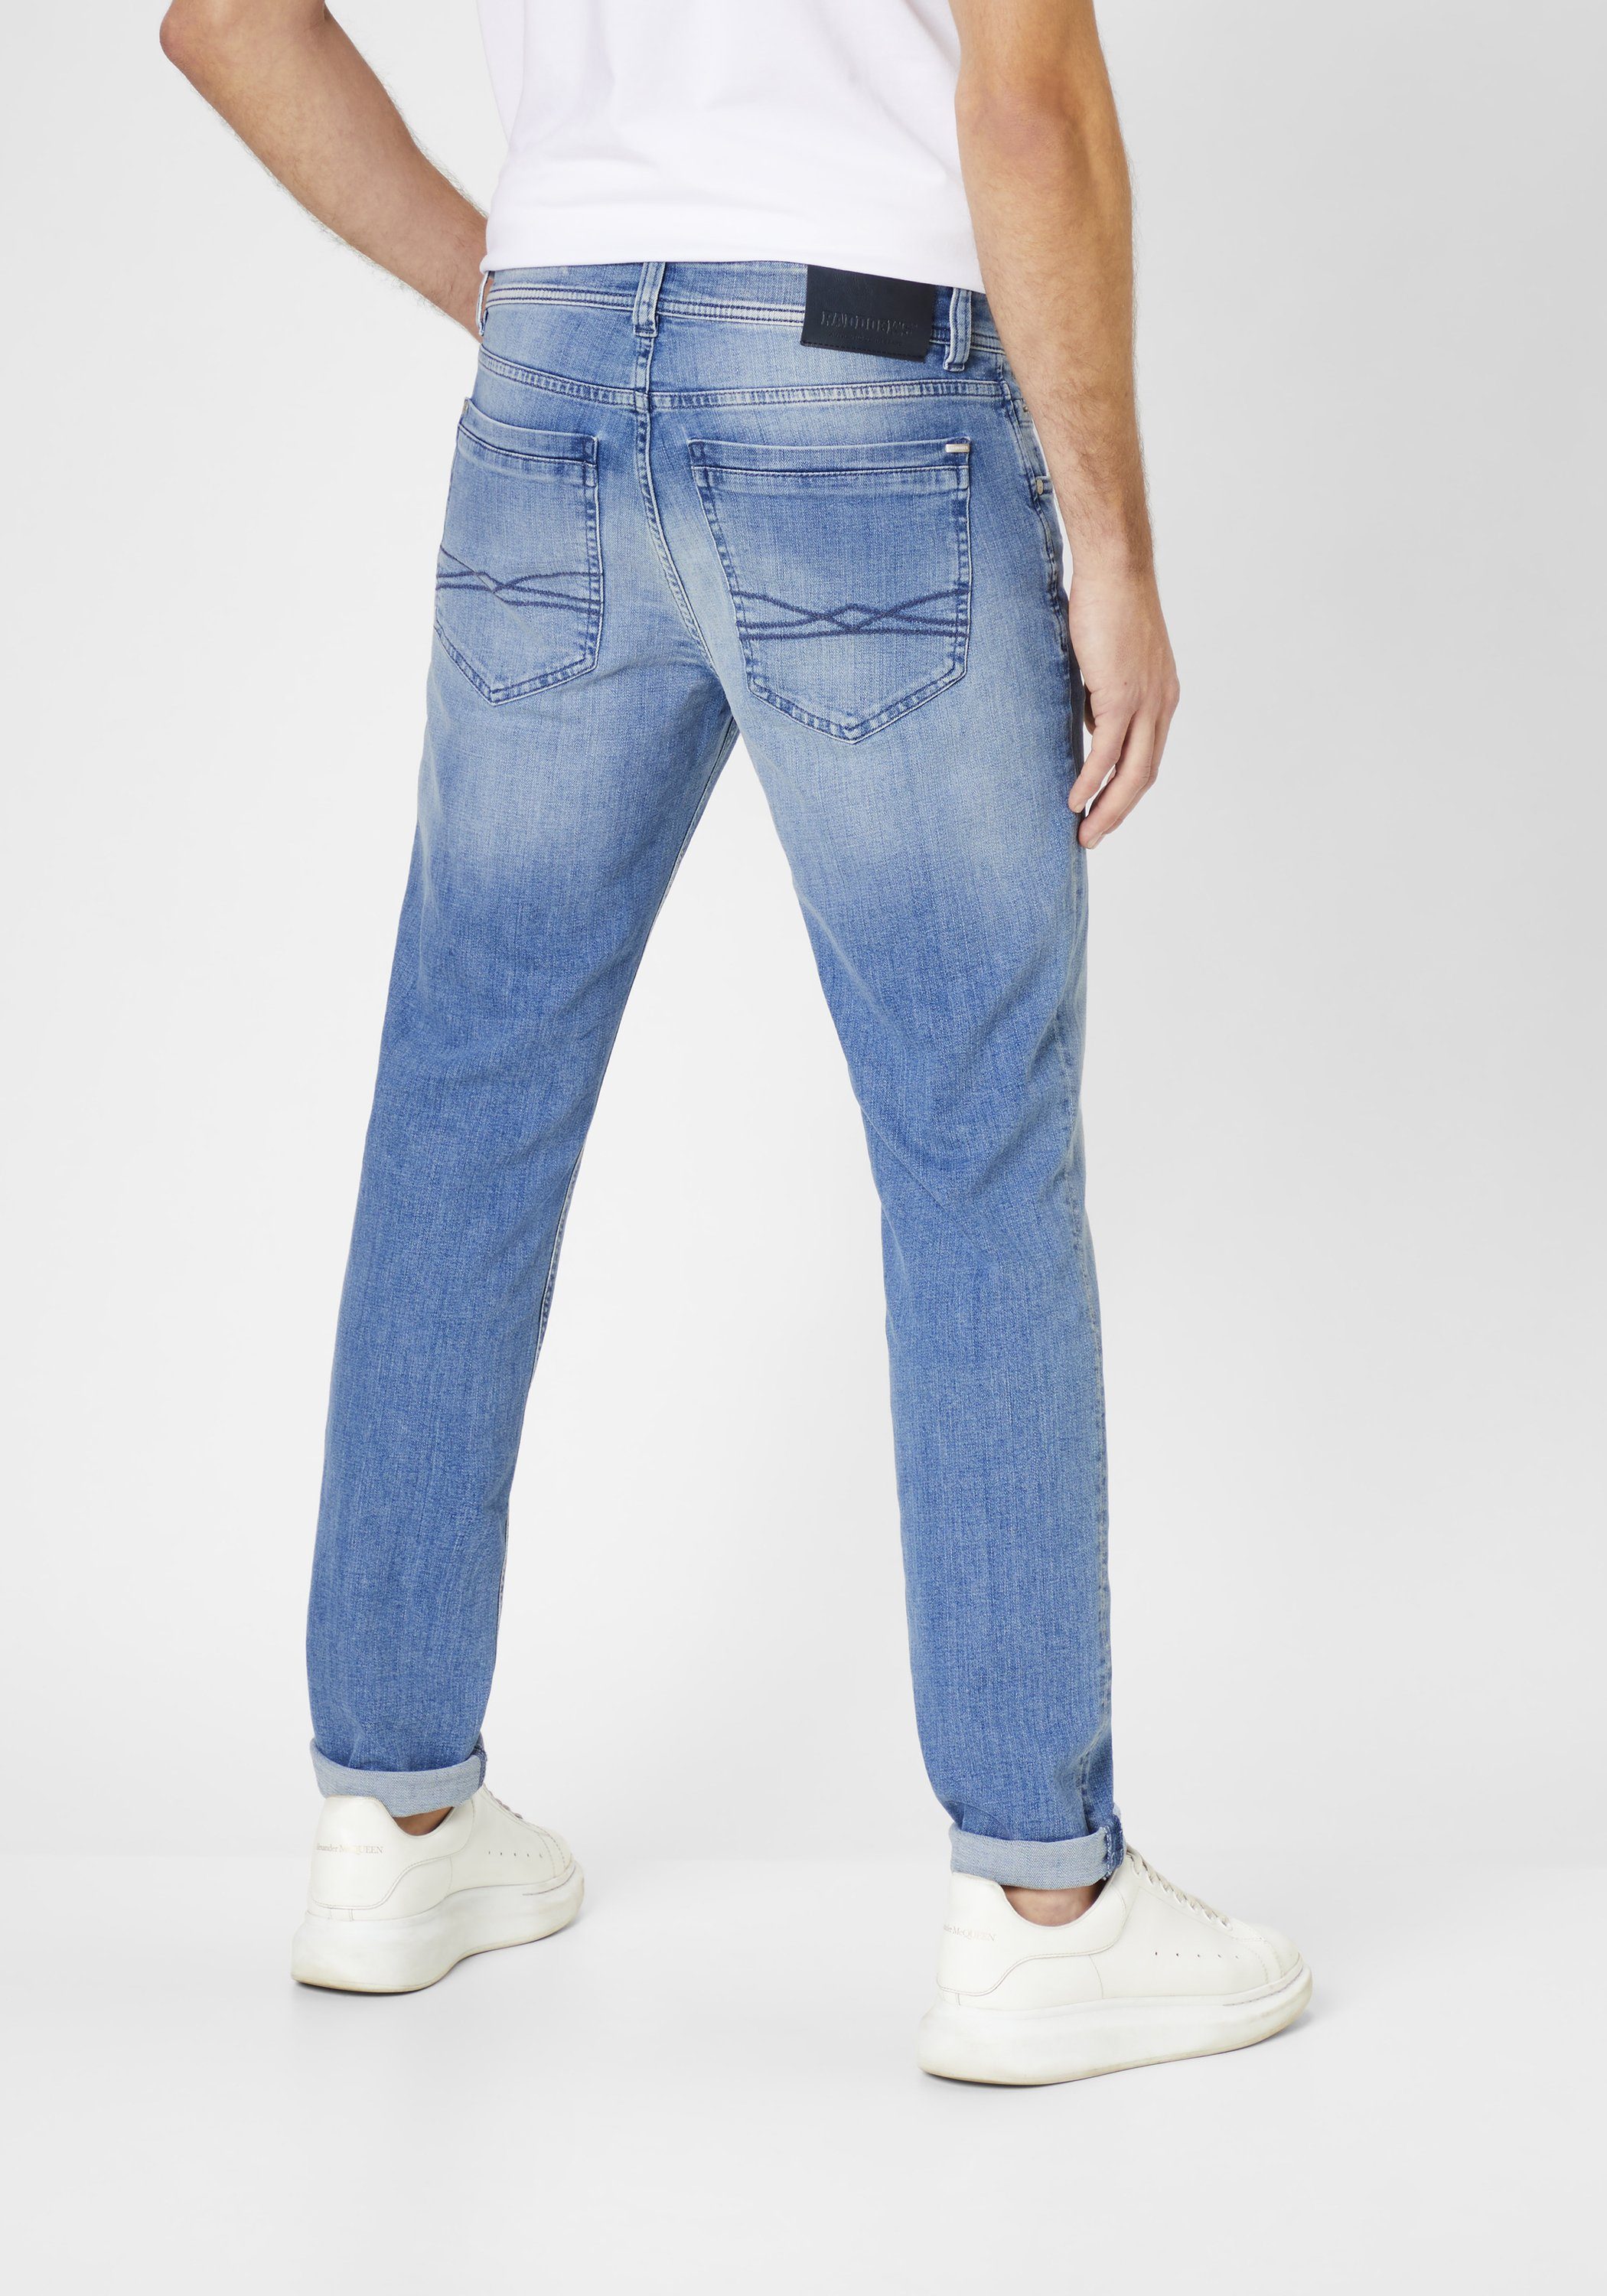 DEAN Stretch Paddock's Jeanshose Slim-fit-Jeans mit